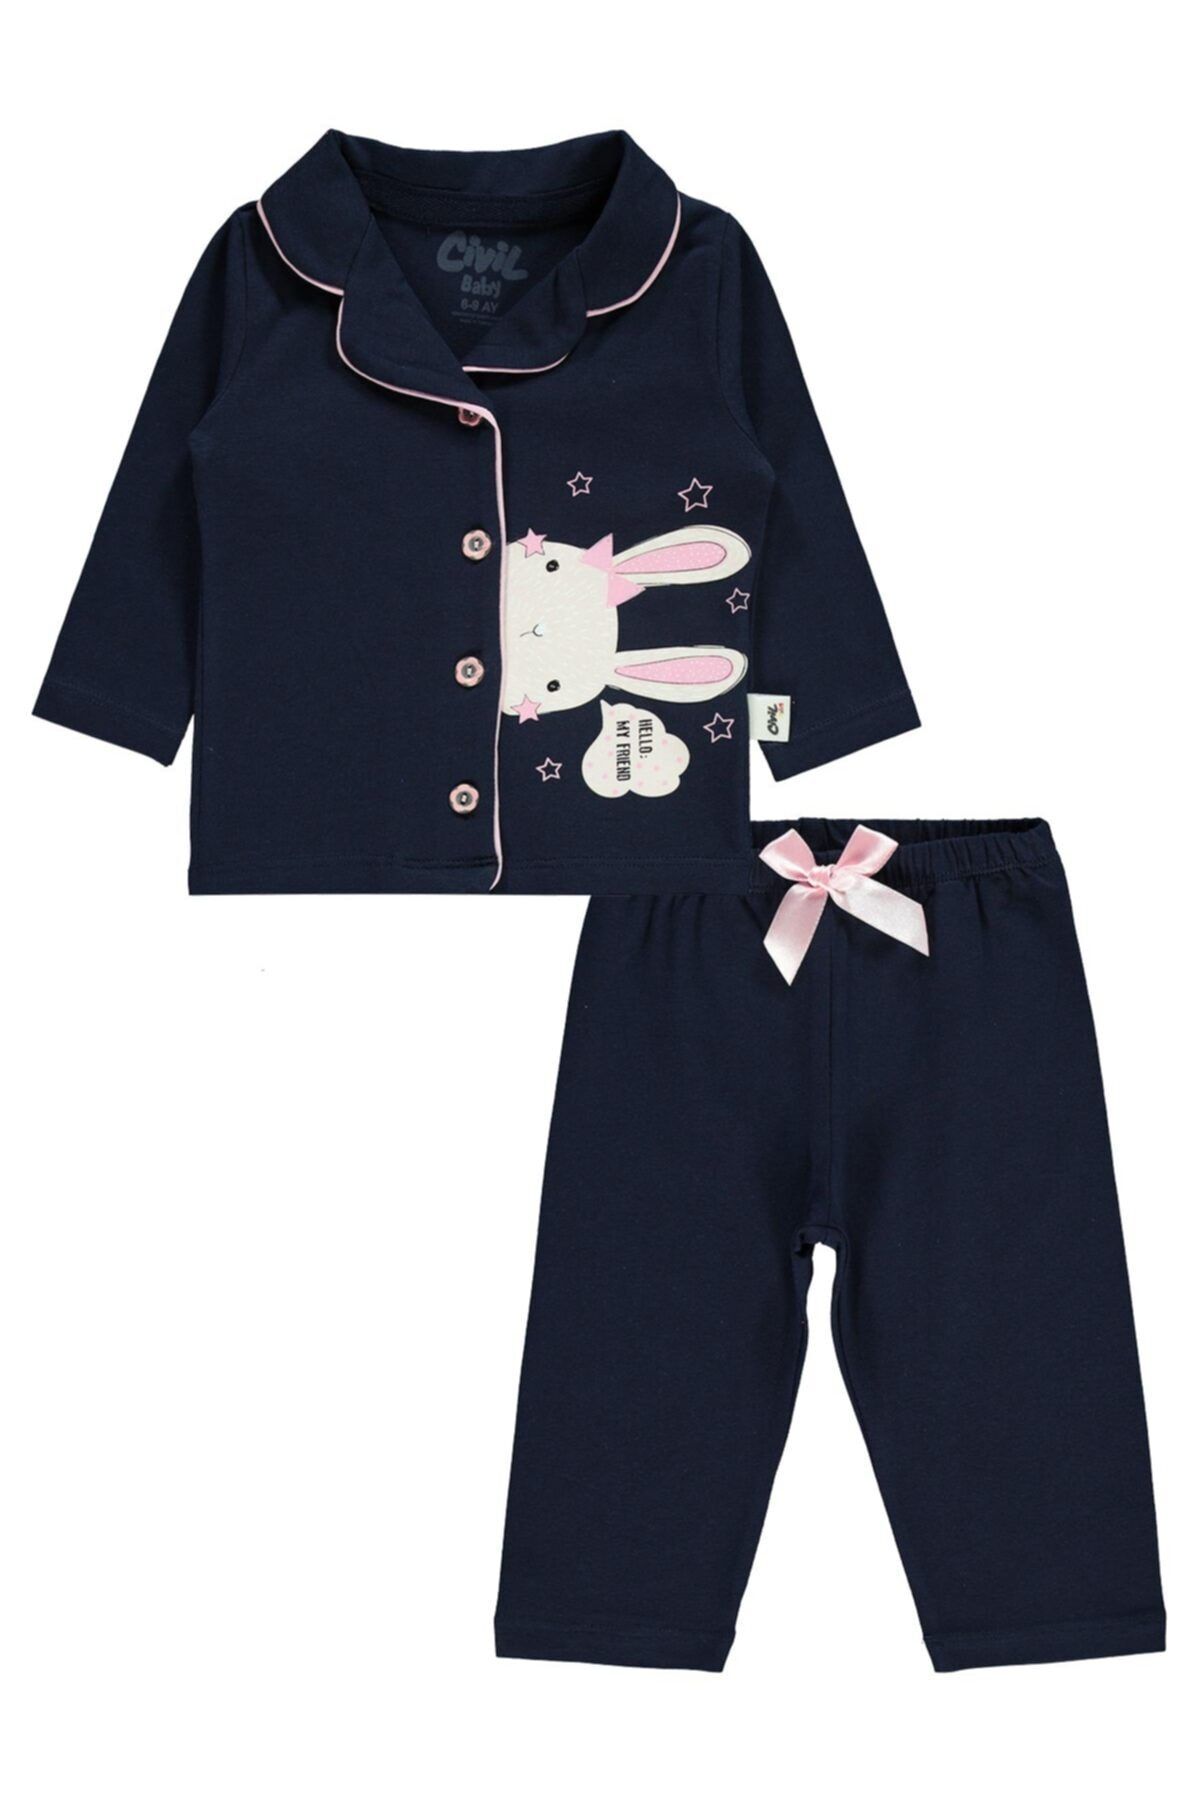 Civil Baby Kız Bebek Lacivert Pijama Takımı 6-18 Ay